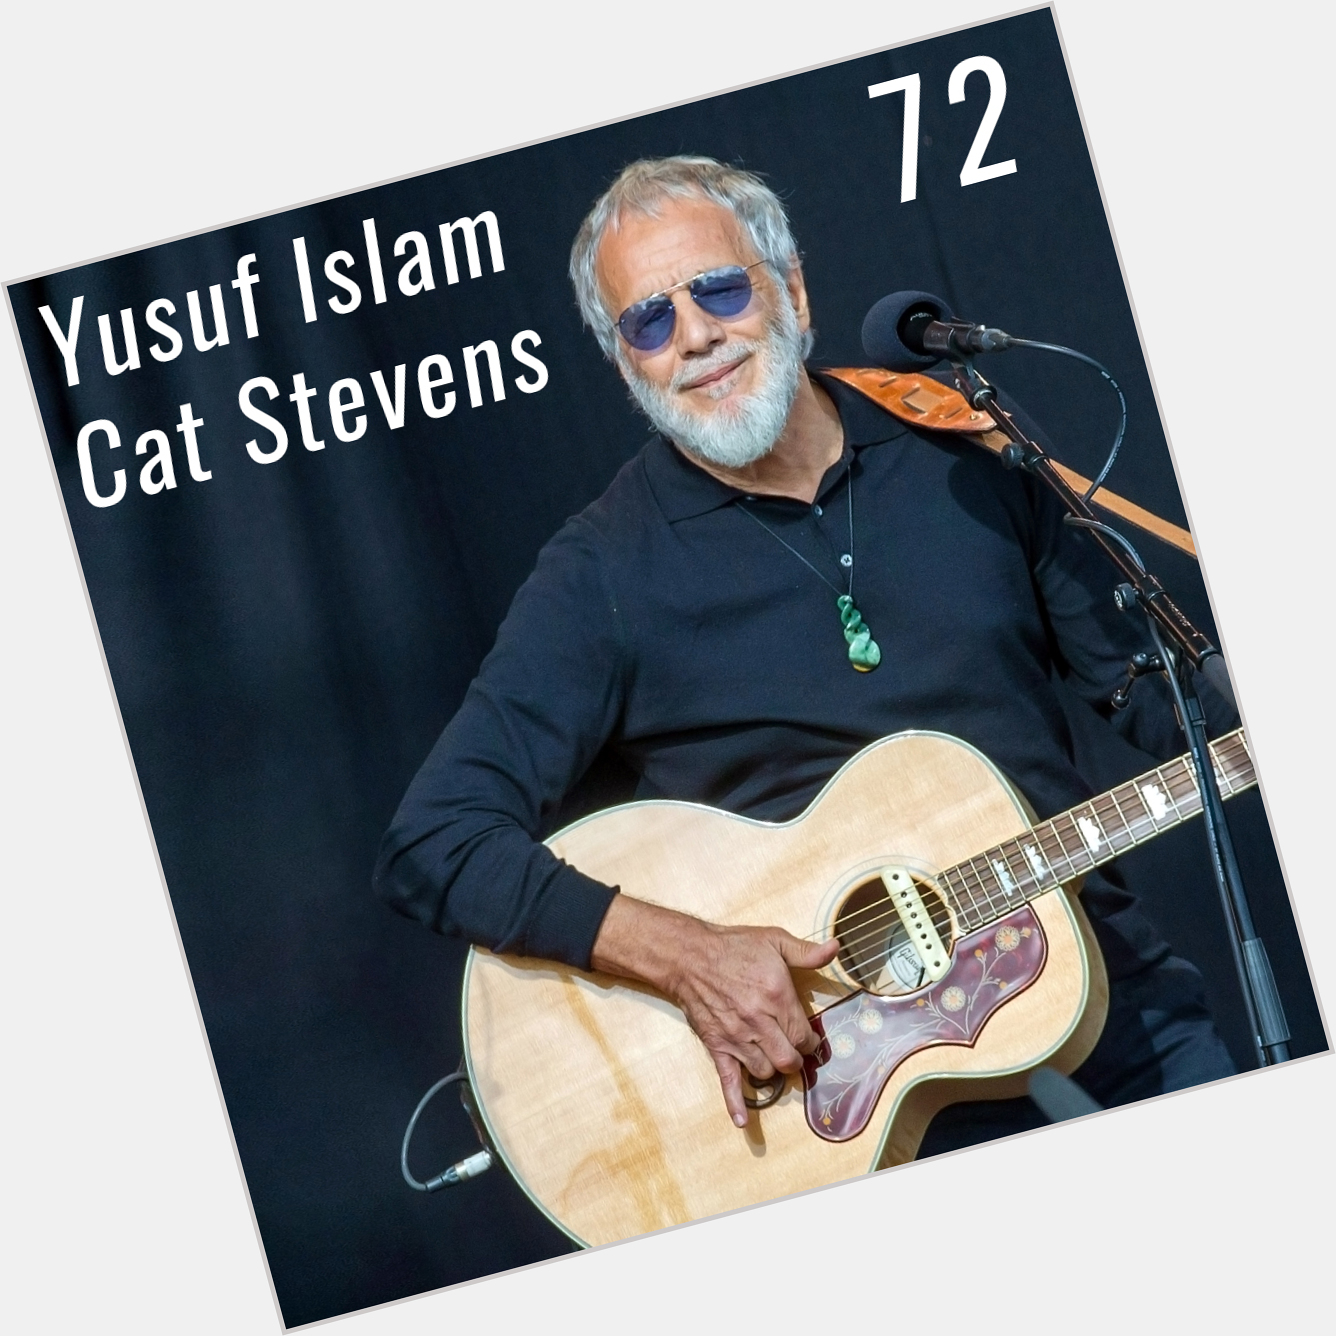 Happy 72nd birthday Yusuf Islam (Cat Stevens)!

What\s your favorite Islam/Stevens song? 